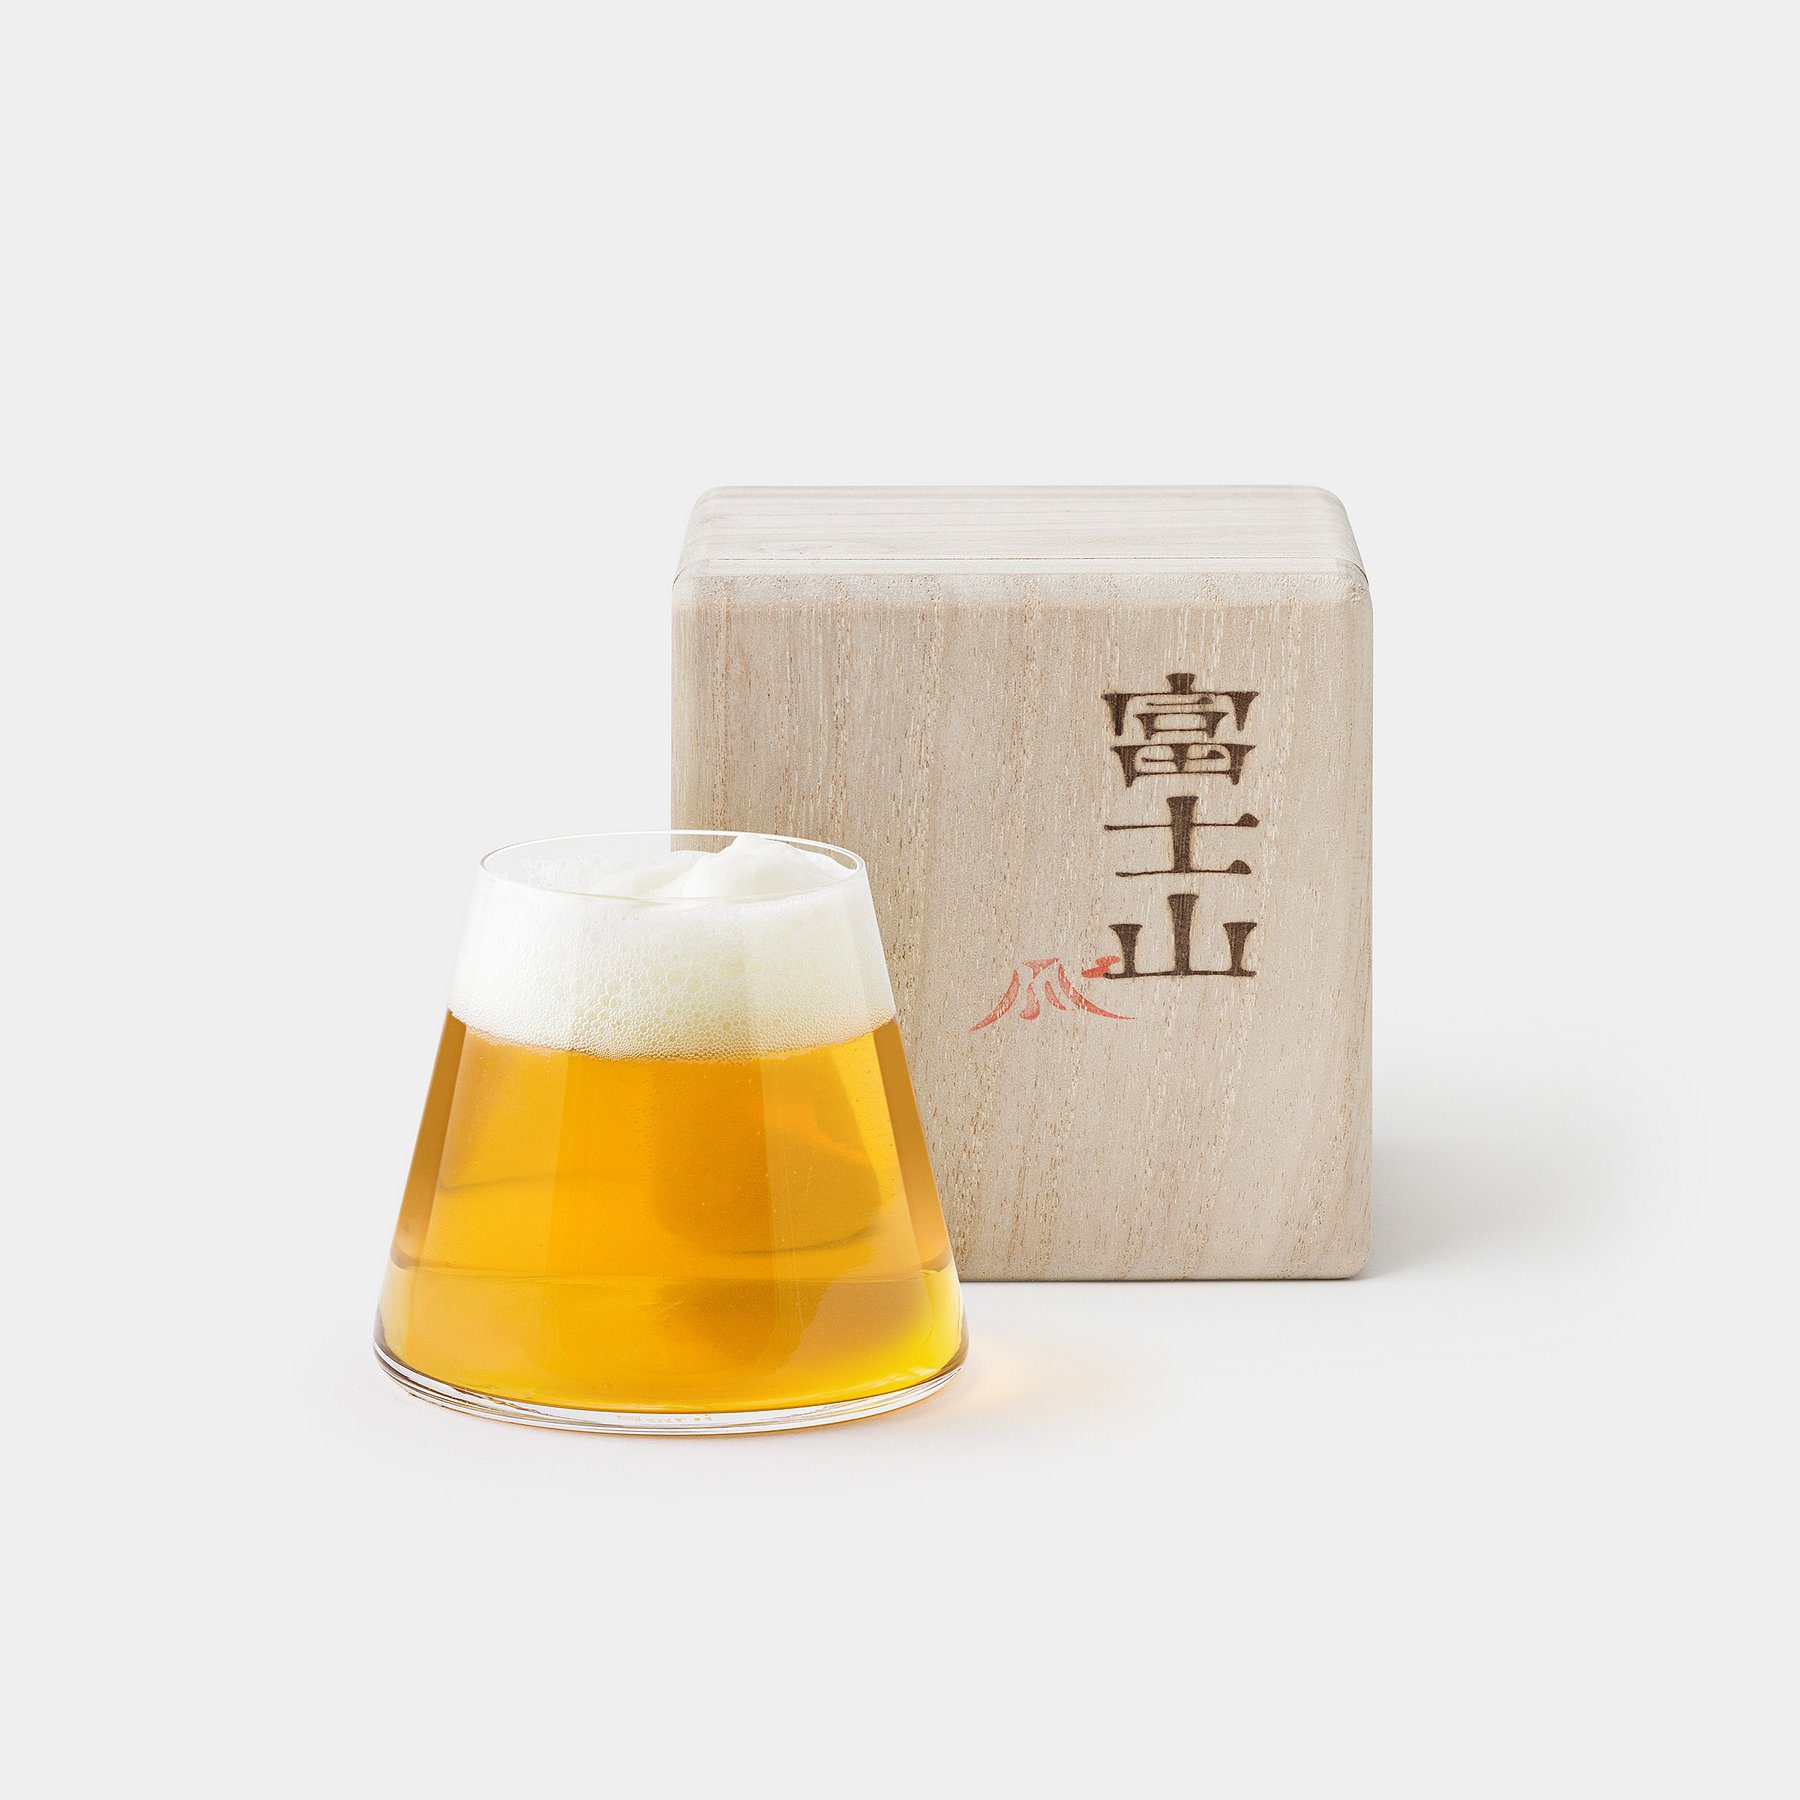 fujiyama-beer-glass-with-box_1800x1800